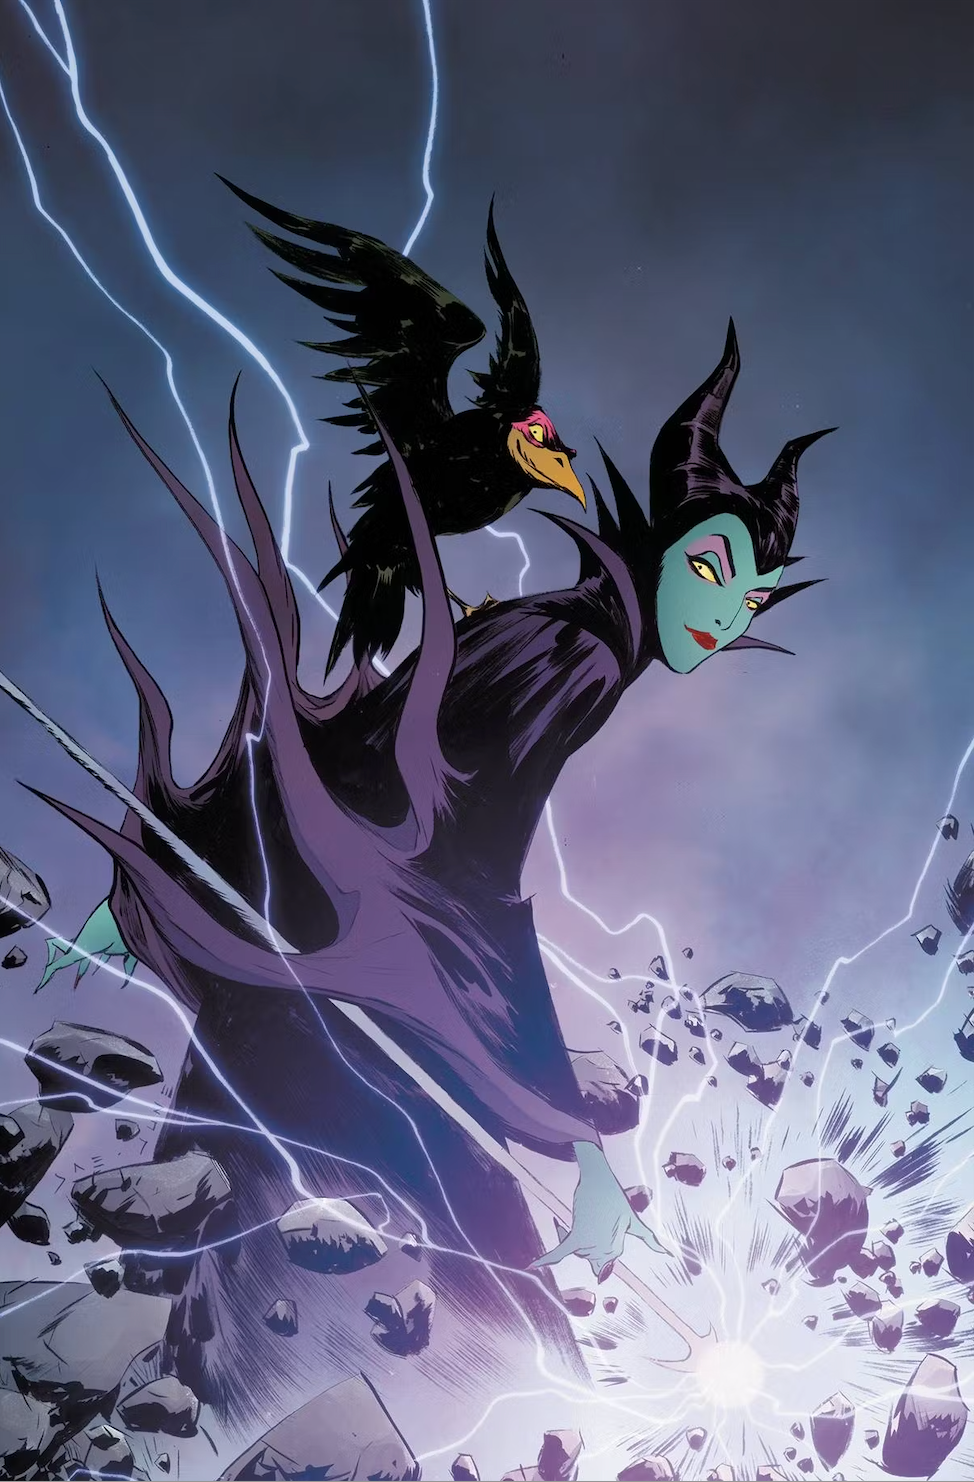 Disney Villains Maleficent #1 Lee 1:200 Virgin Foil Edition Variant CGC Signature Series 9.8